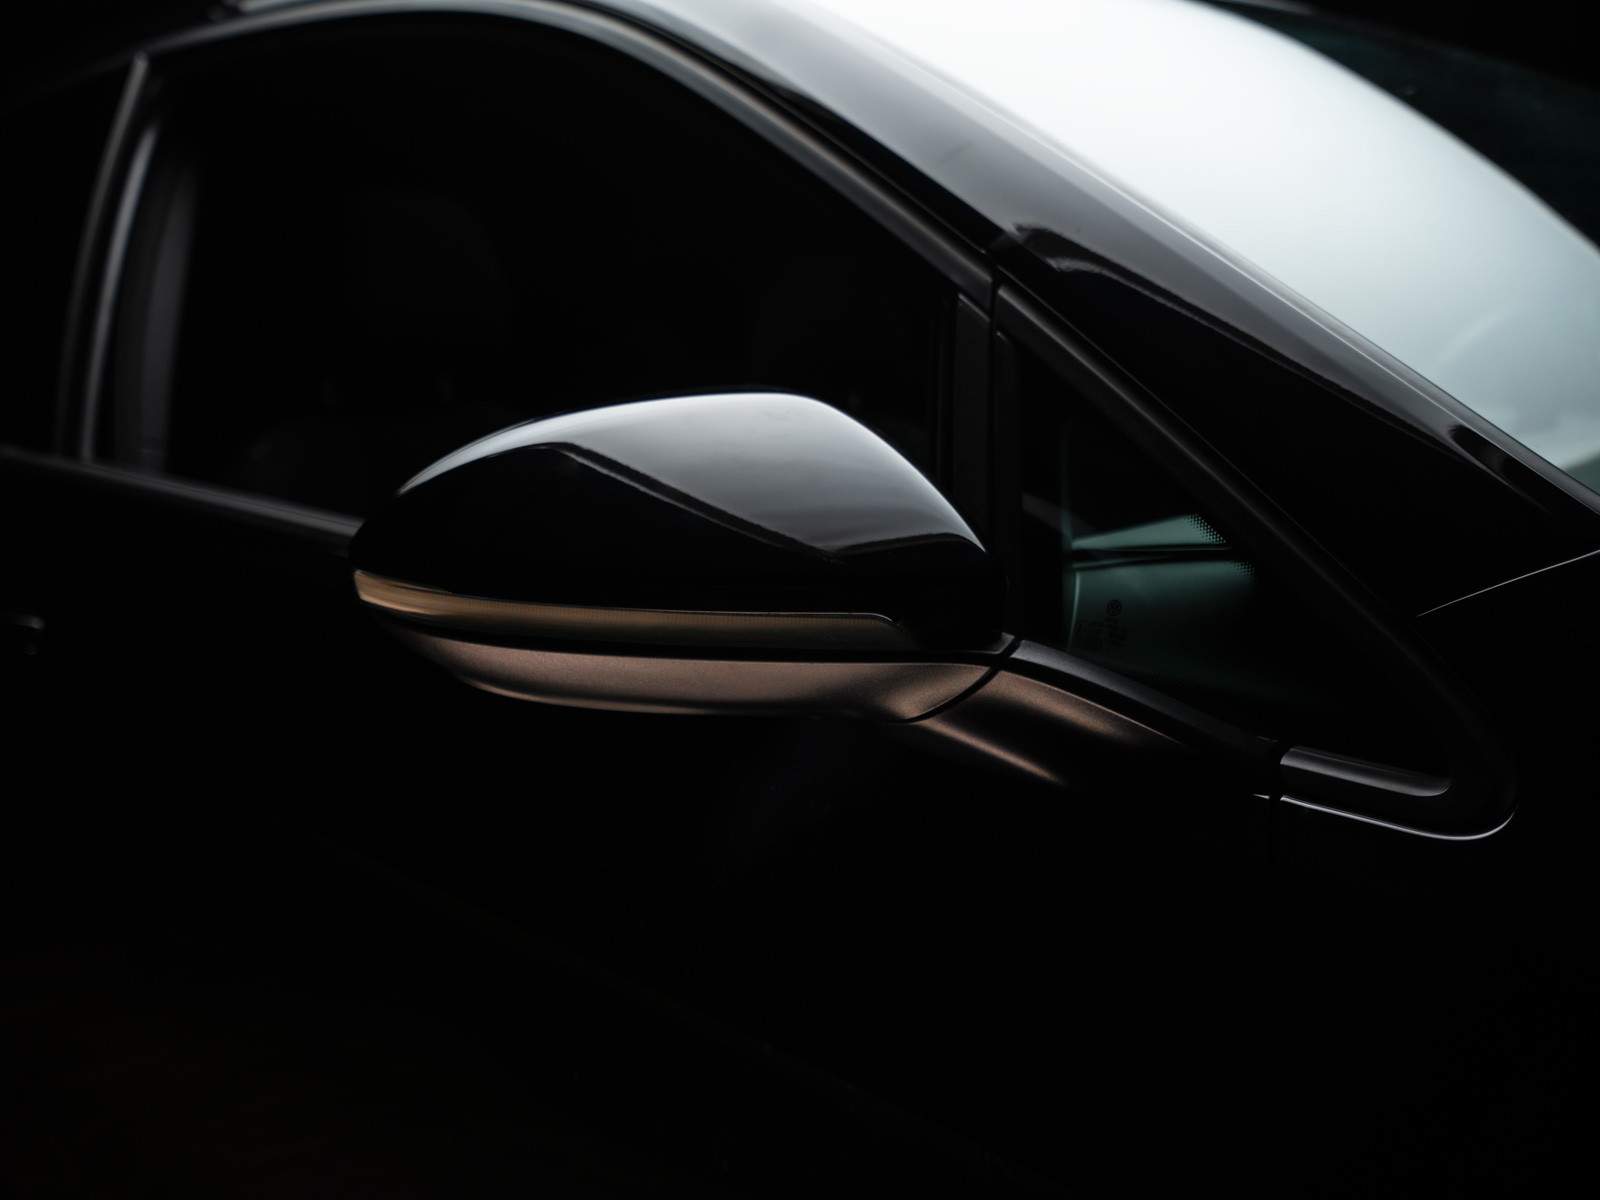 TECTICO LED Umfeldbeleuchtung Spiegel 12V Auto Umgebungslicht 6000K  Kaltweiß Kompatibel mit VW Golf 6 Passat B7 EOS Jetta 6 Touran, 2 Lampen